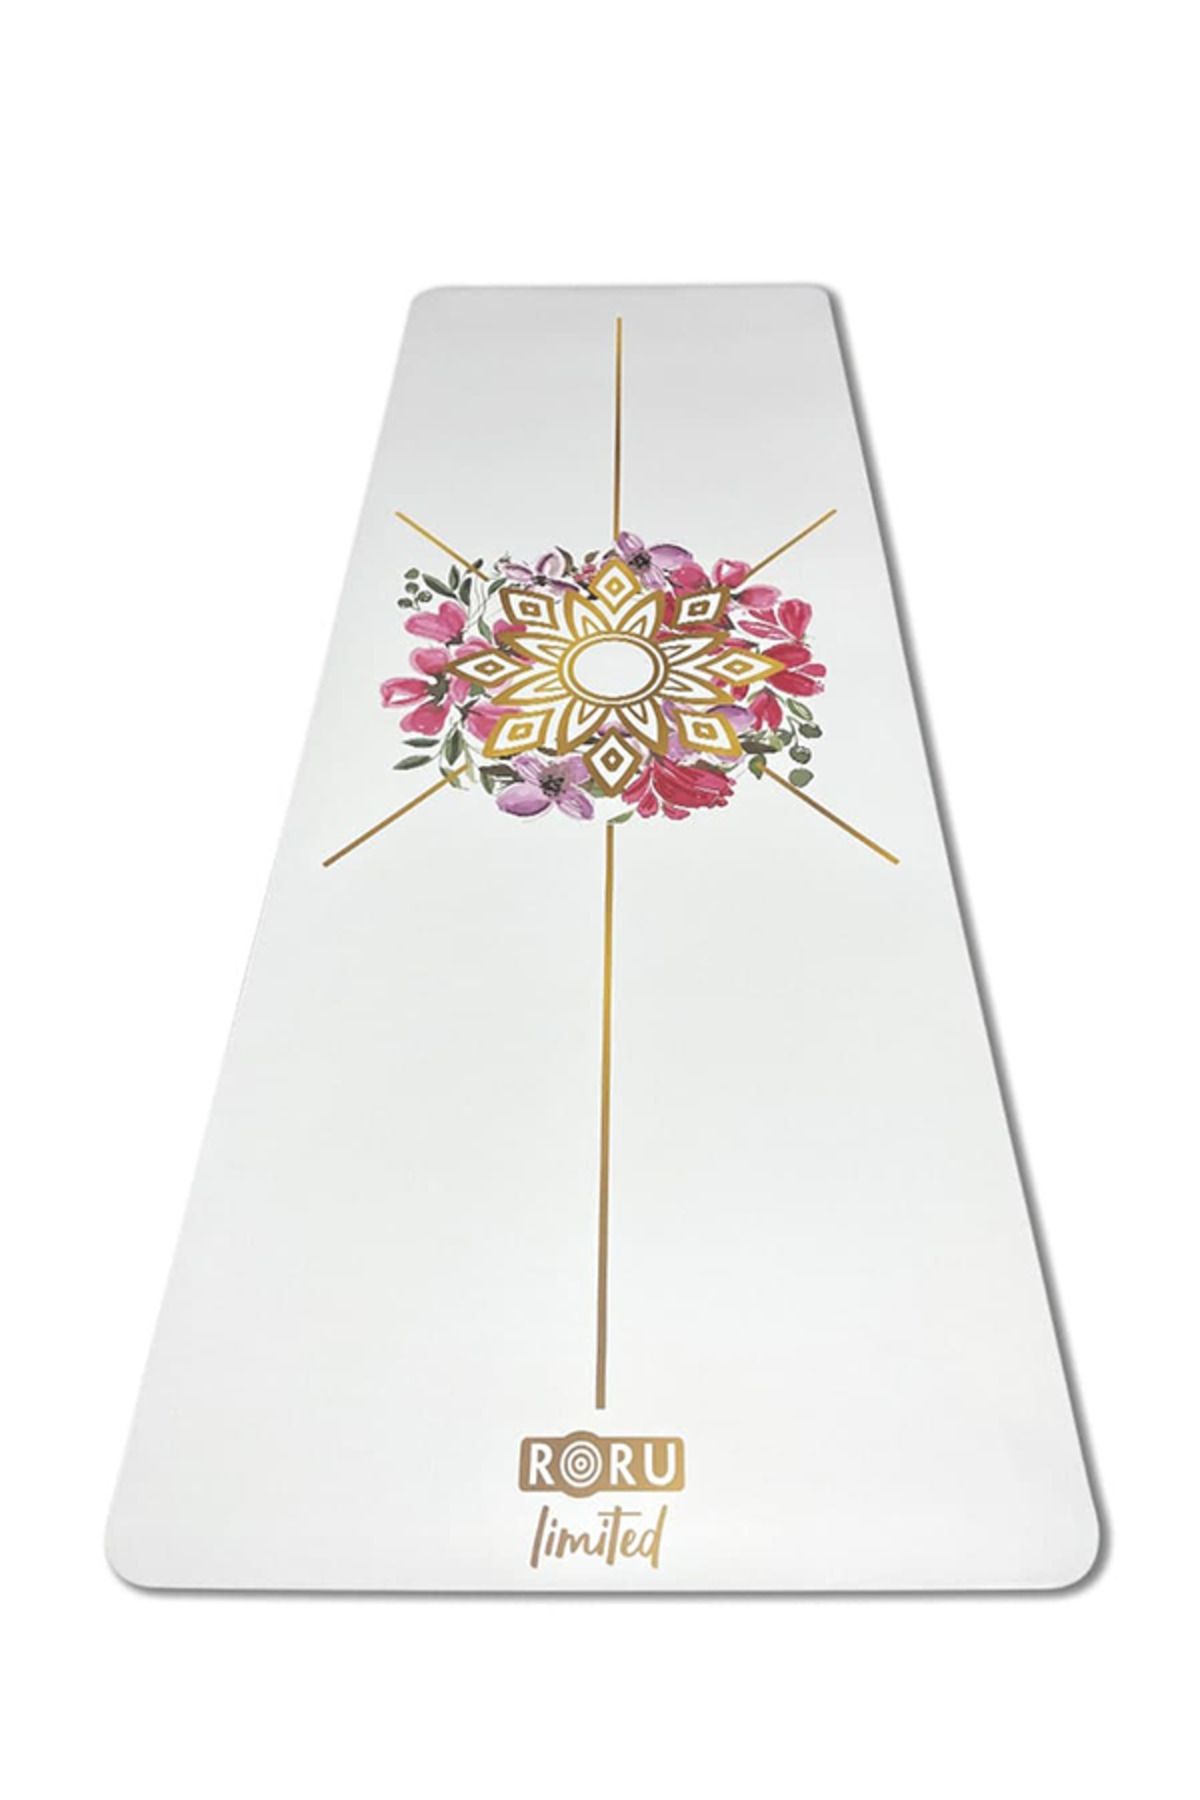 Roru Concept Sun Series Kaydırmaz 5mm Yoga Matı Printed Flower/